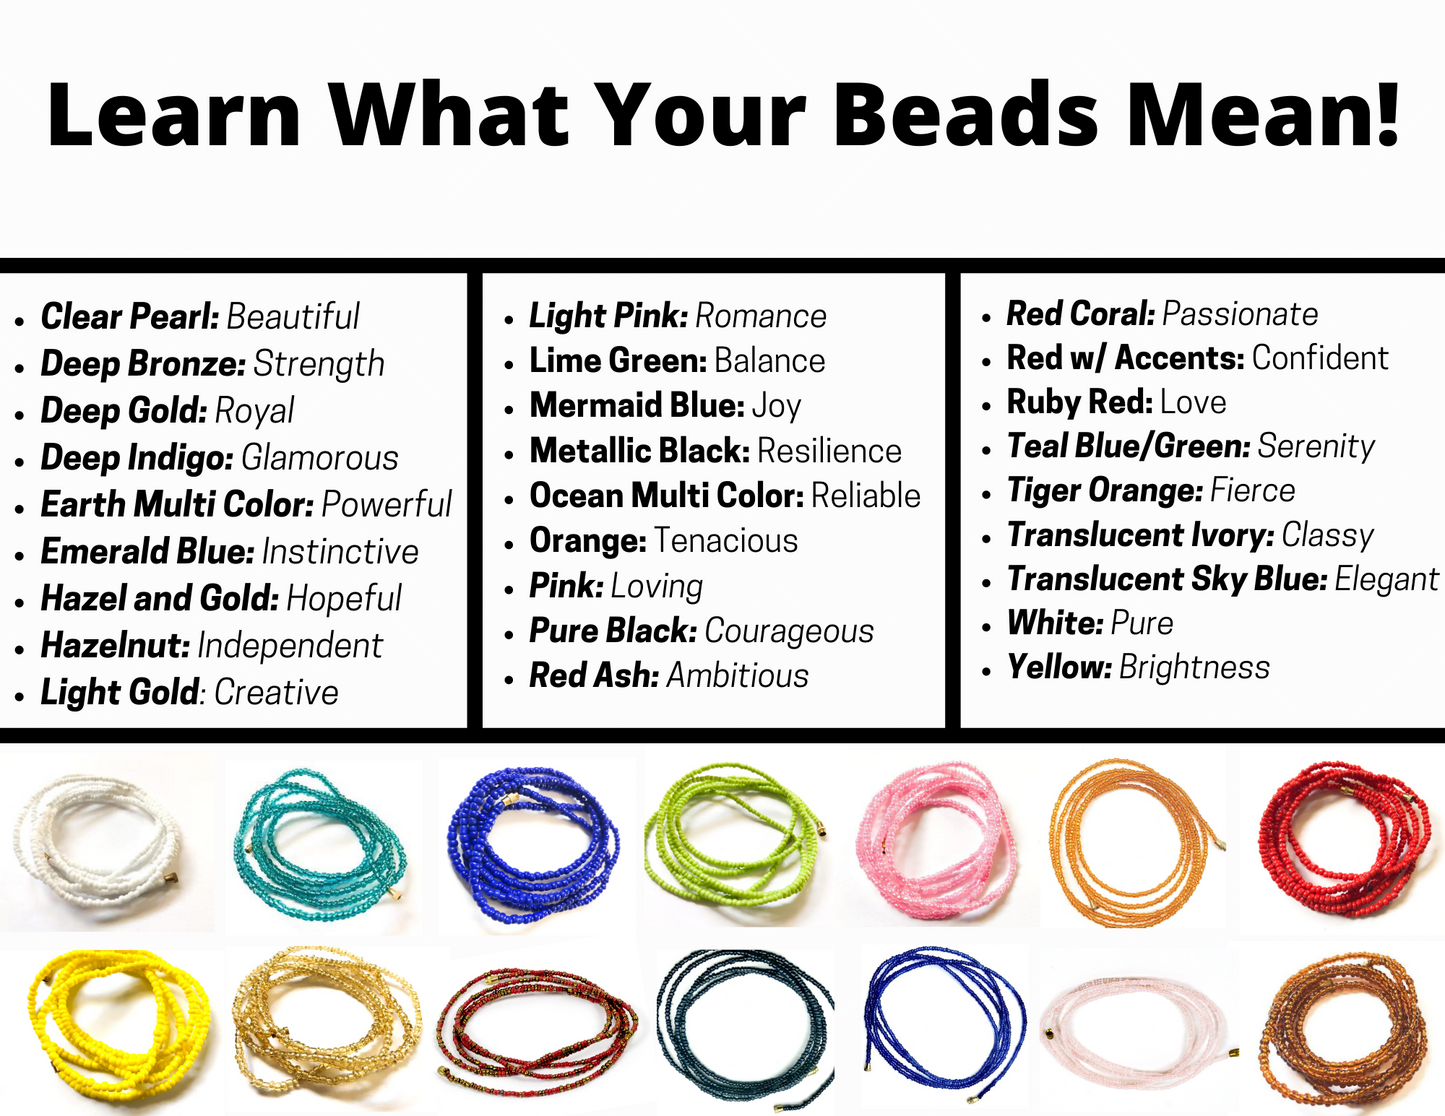 Deep Indigo! African Waist Beads / Necklace / Bracelet / Anklet